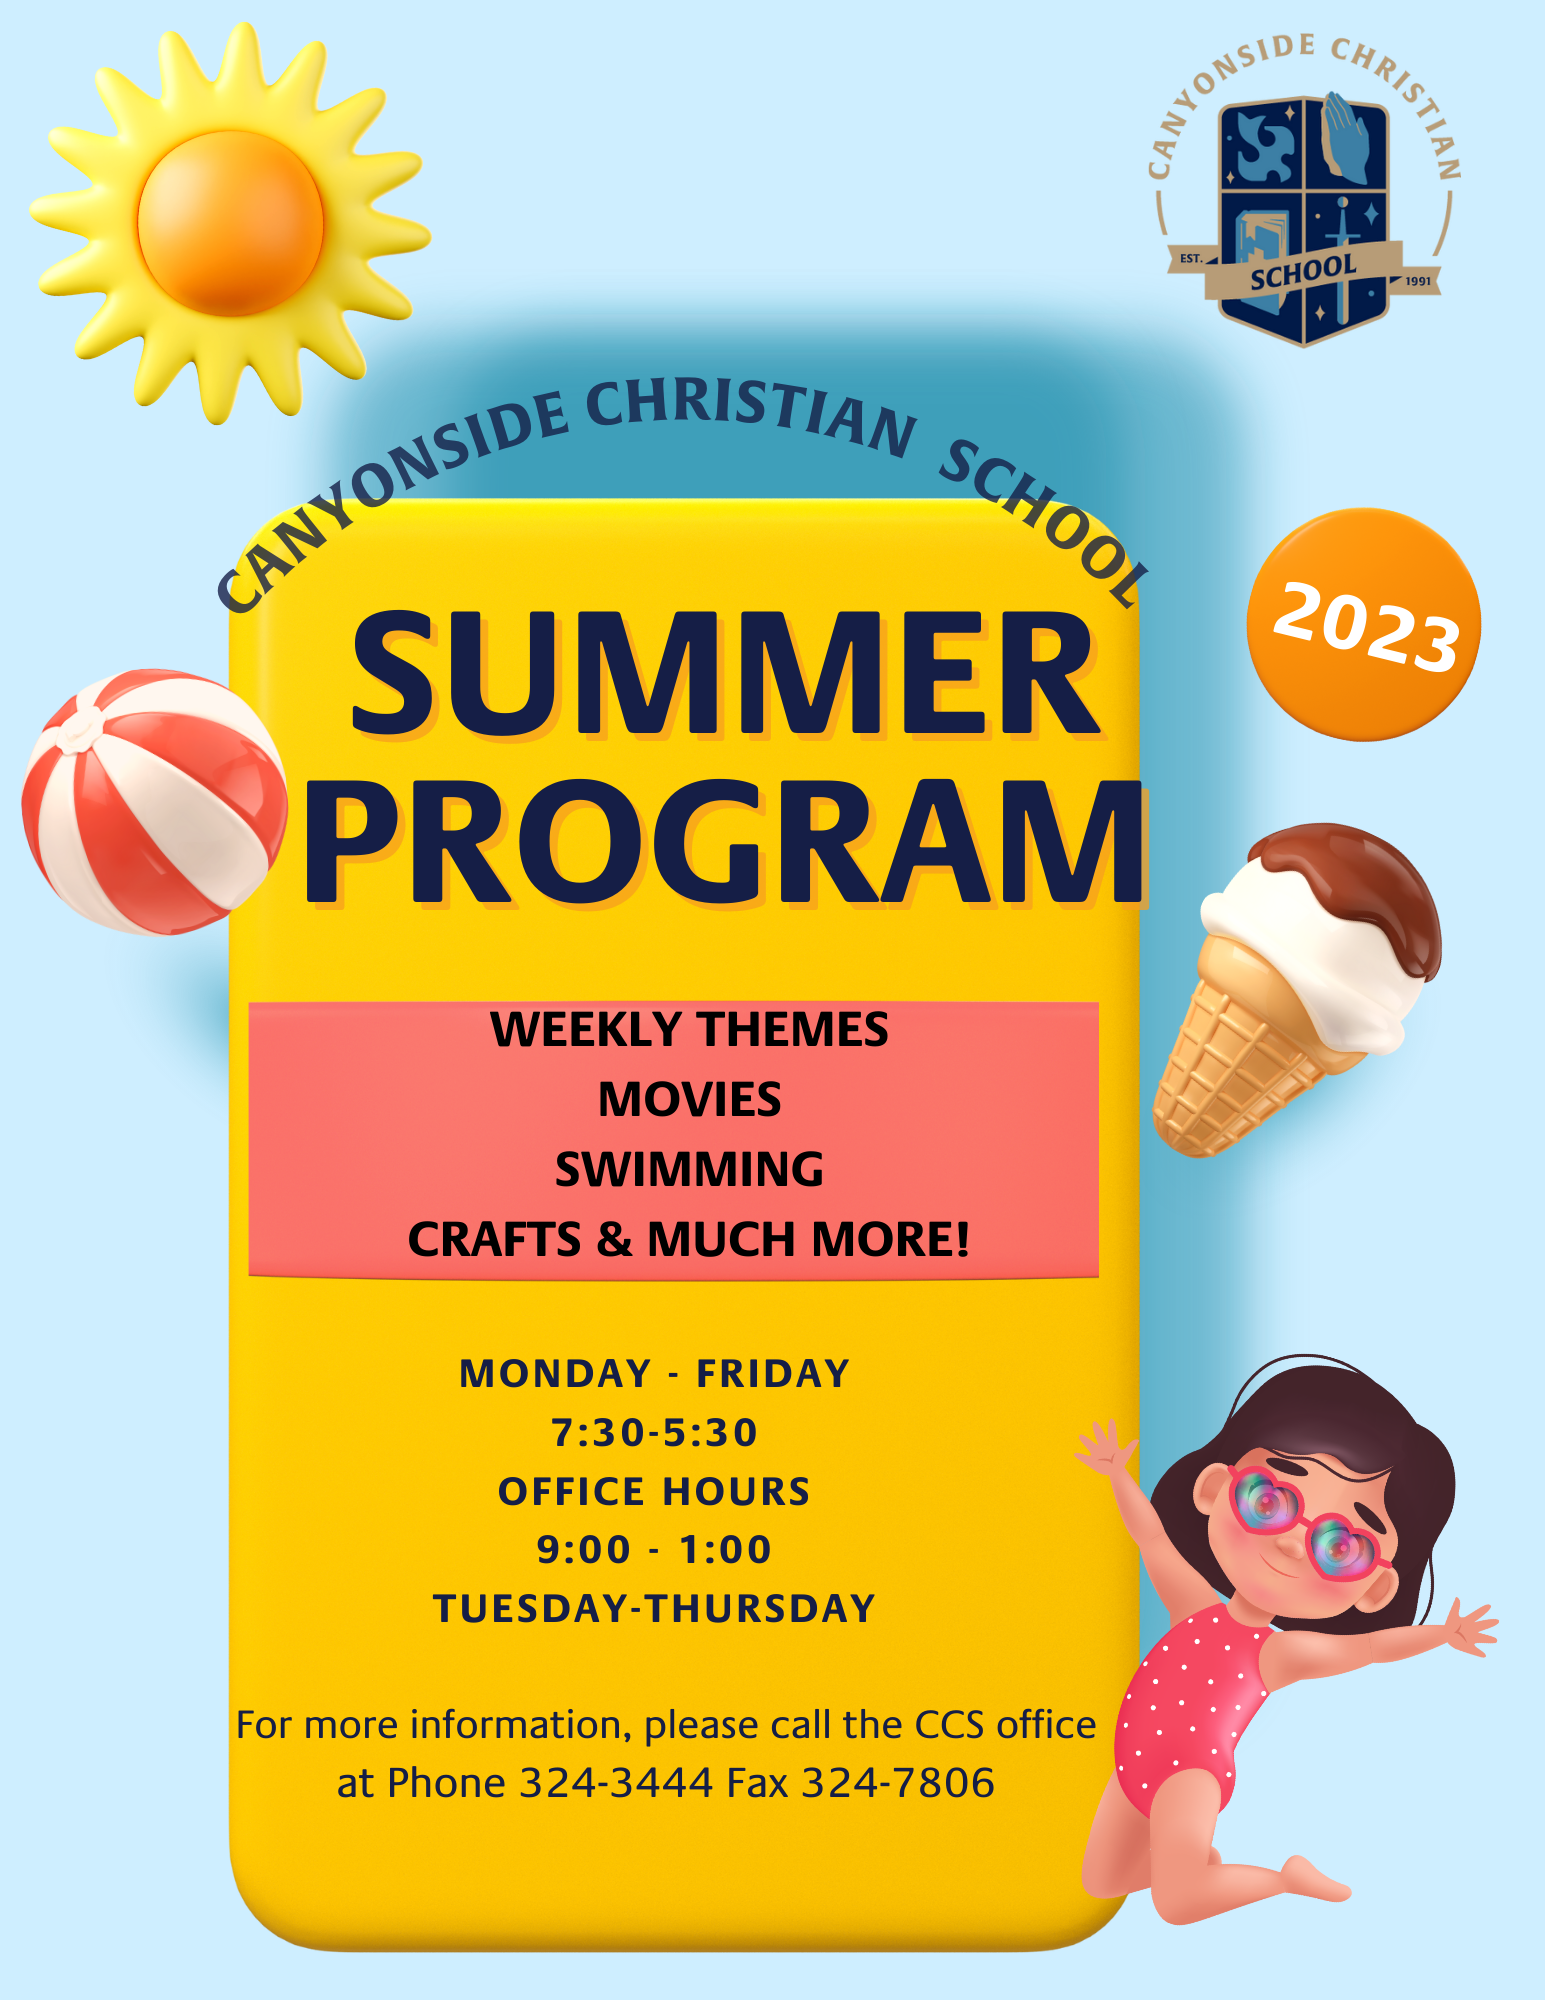 Canyonside christian school summer program flyer